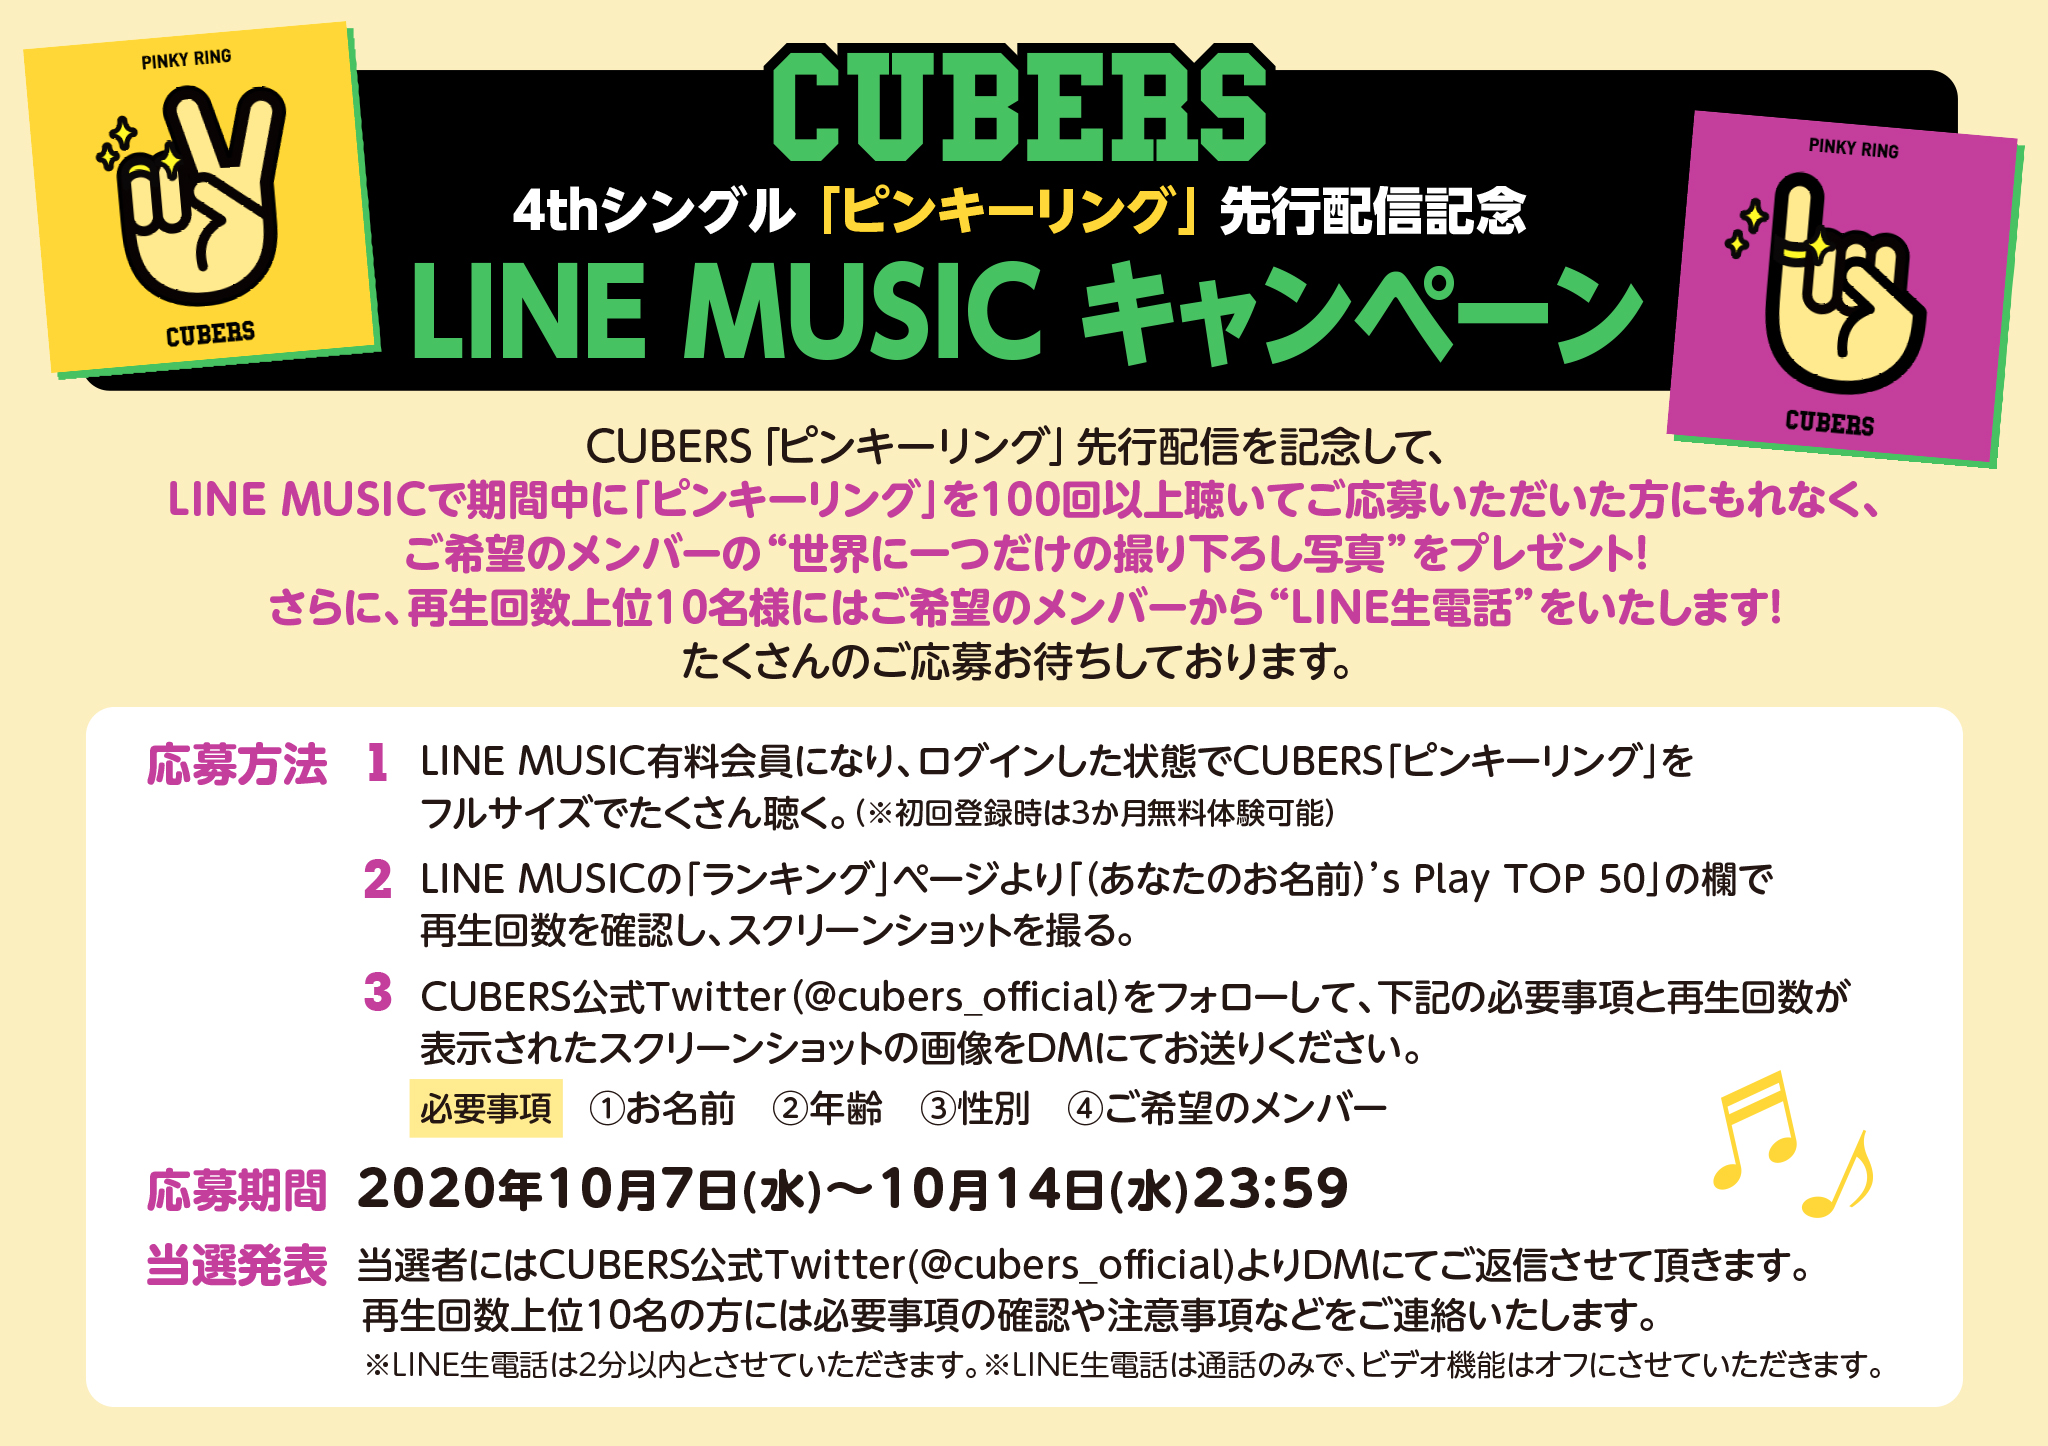 【NEWS】CUBERS 4thシングル「ピンキーリング」先行配信記念LINE MUSICキャンペーン